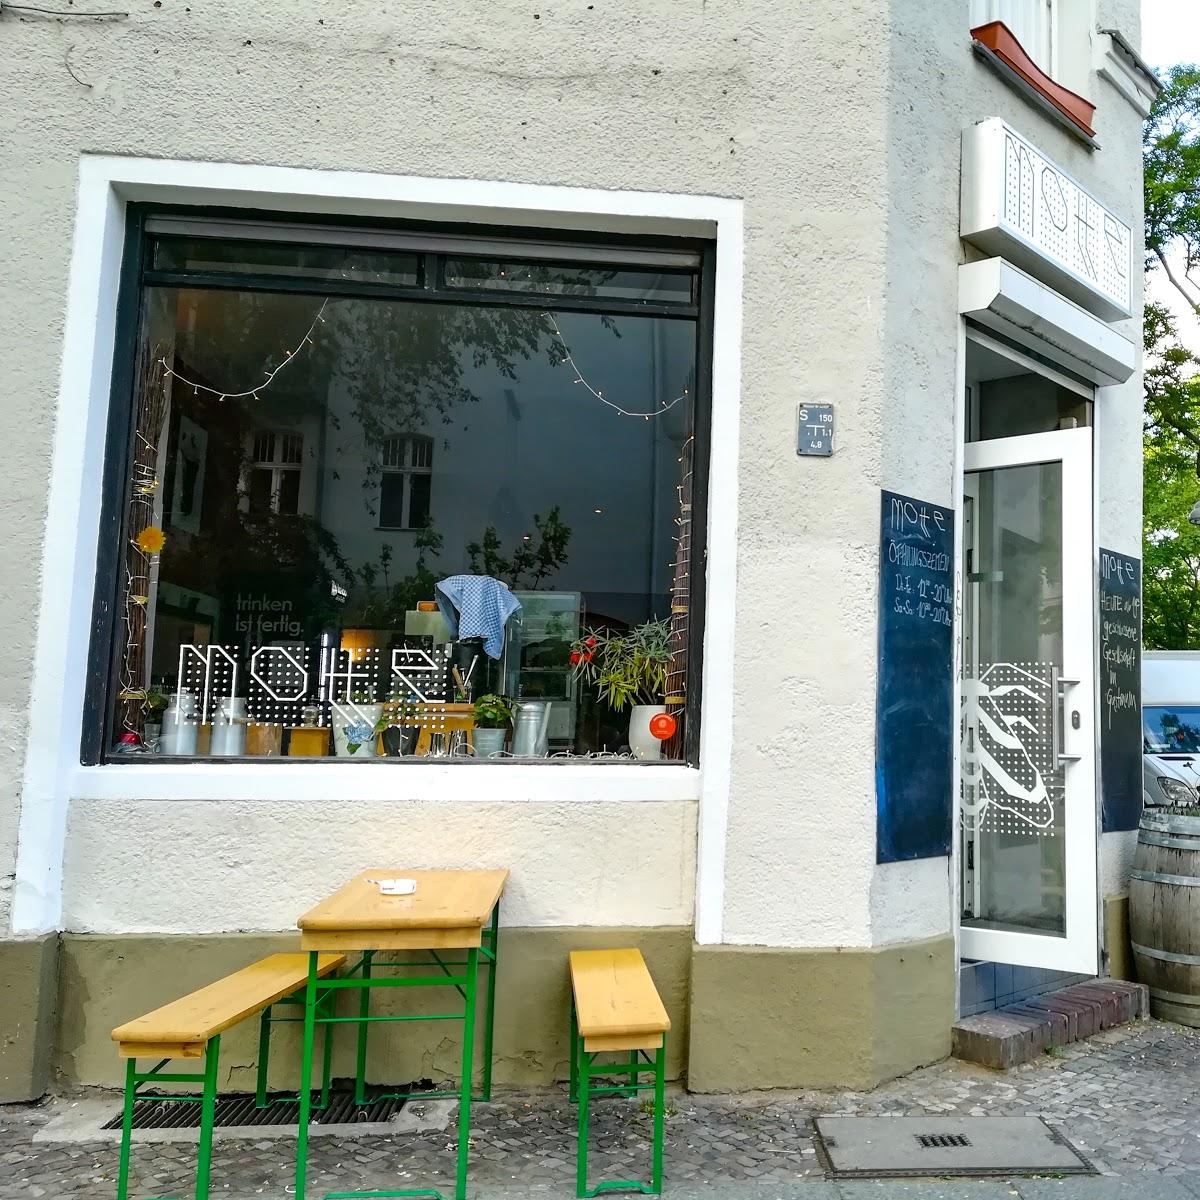 Restaurant "Café Motte" in Berlin